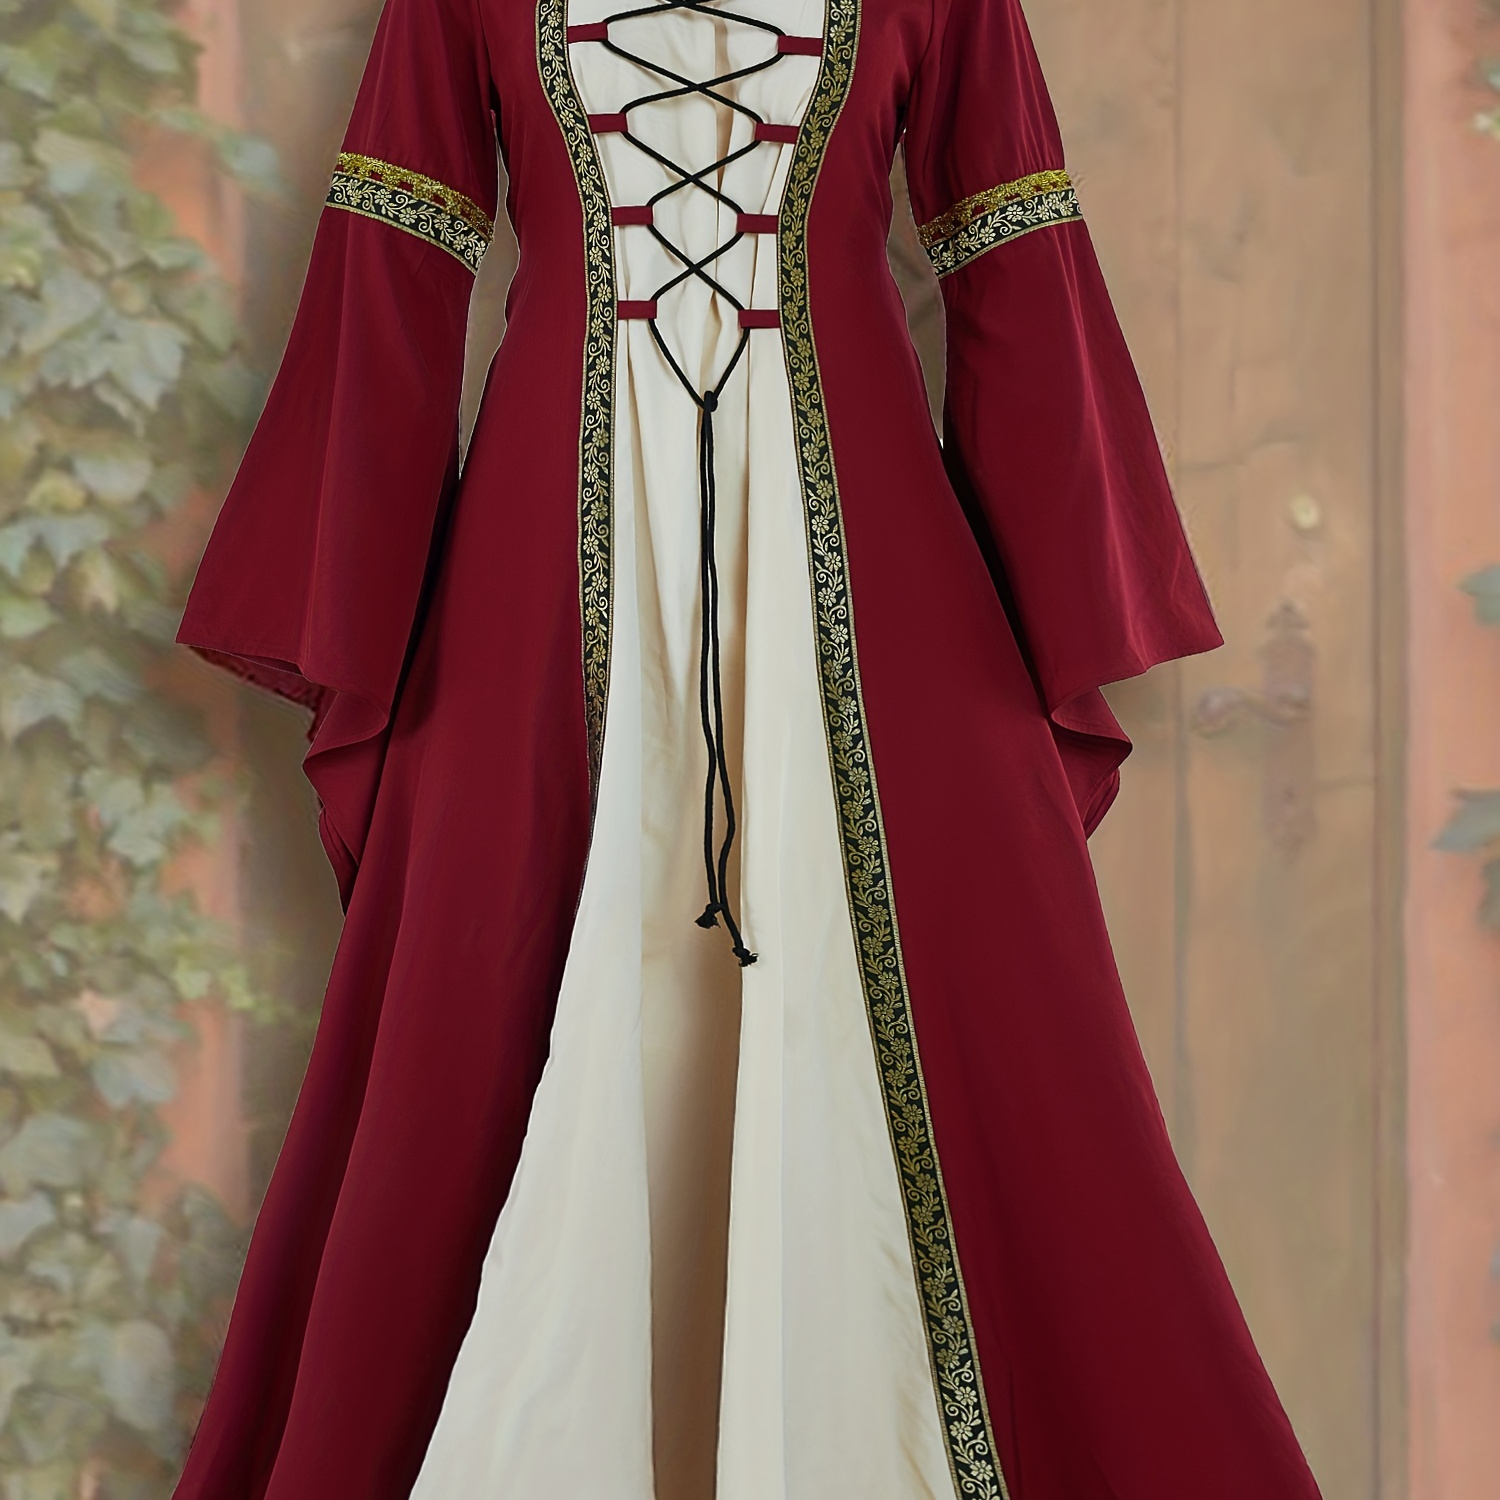 

Criss Cross Ethnic Maxi Dress, Elegant Squared Neck Long Sleeve Dress, Women's Clothing